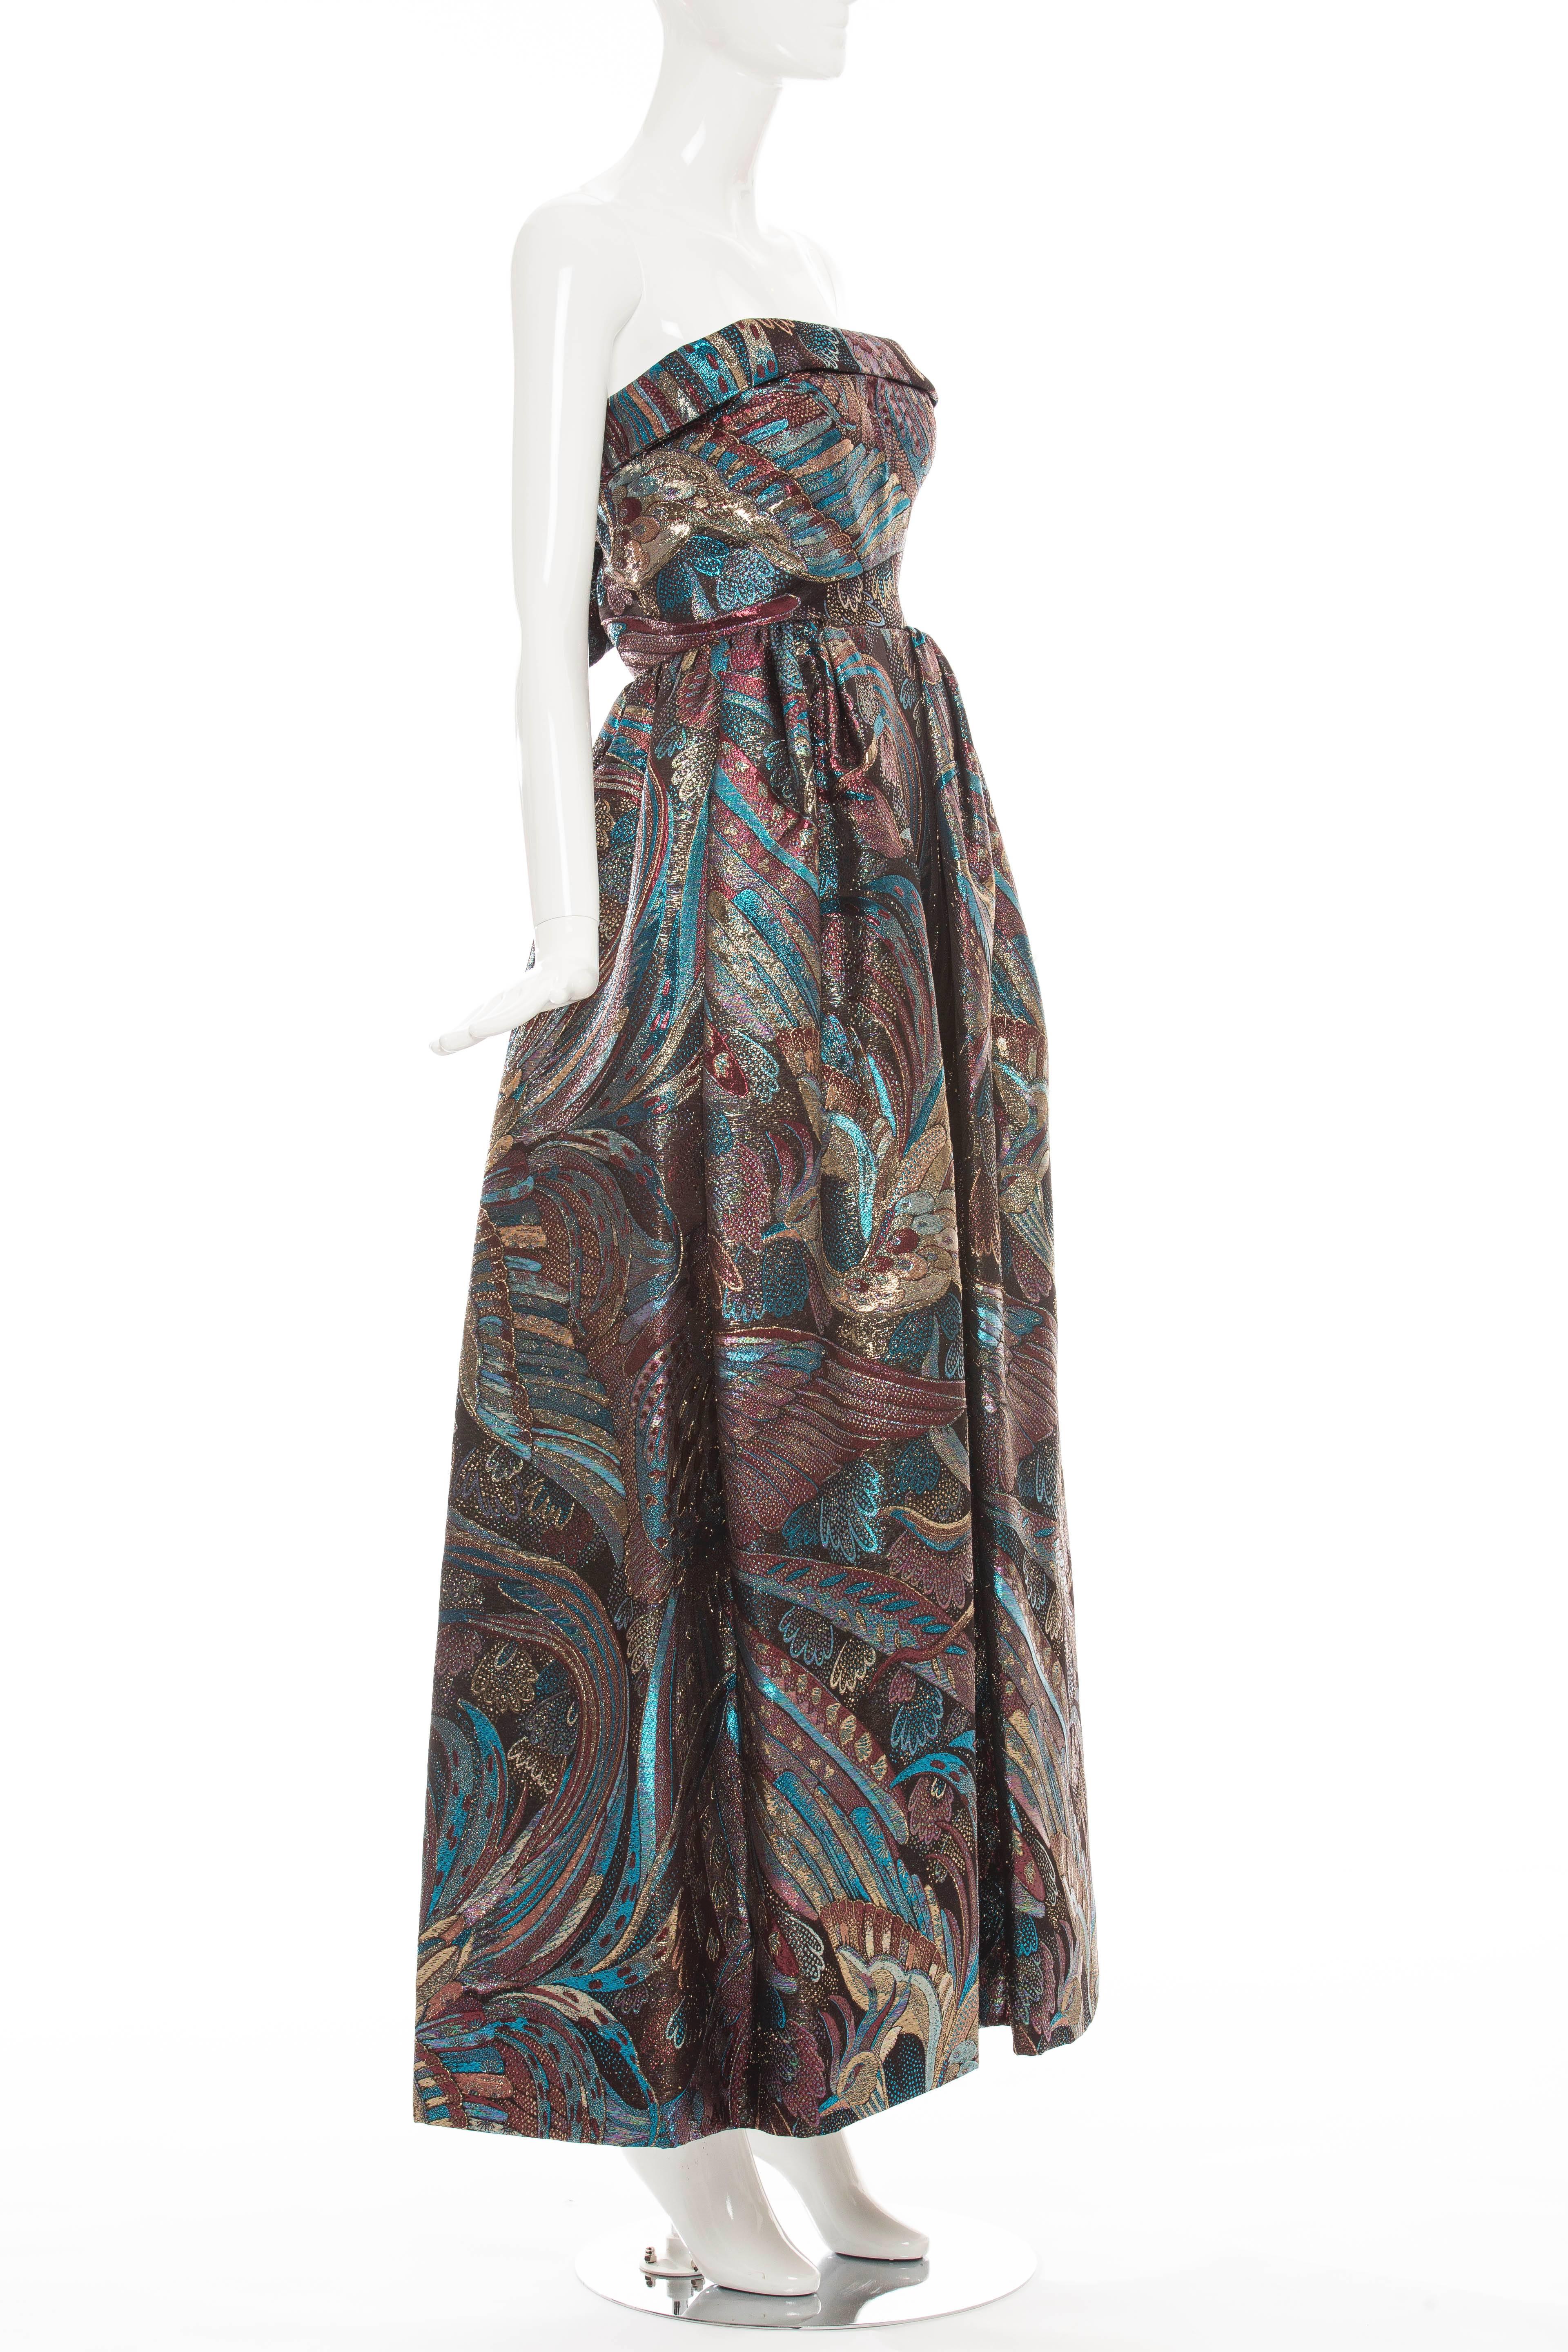 Pauline Trigere, circa 1960's, strapless dress having an allover metallic brocade peacock design, built-in bustier and back zip.